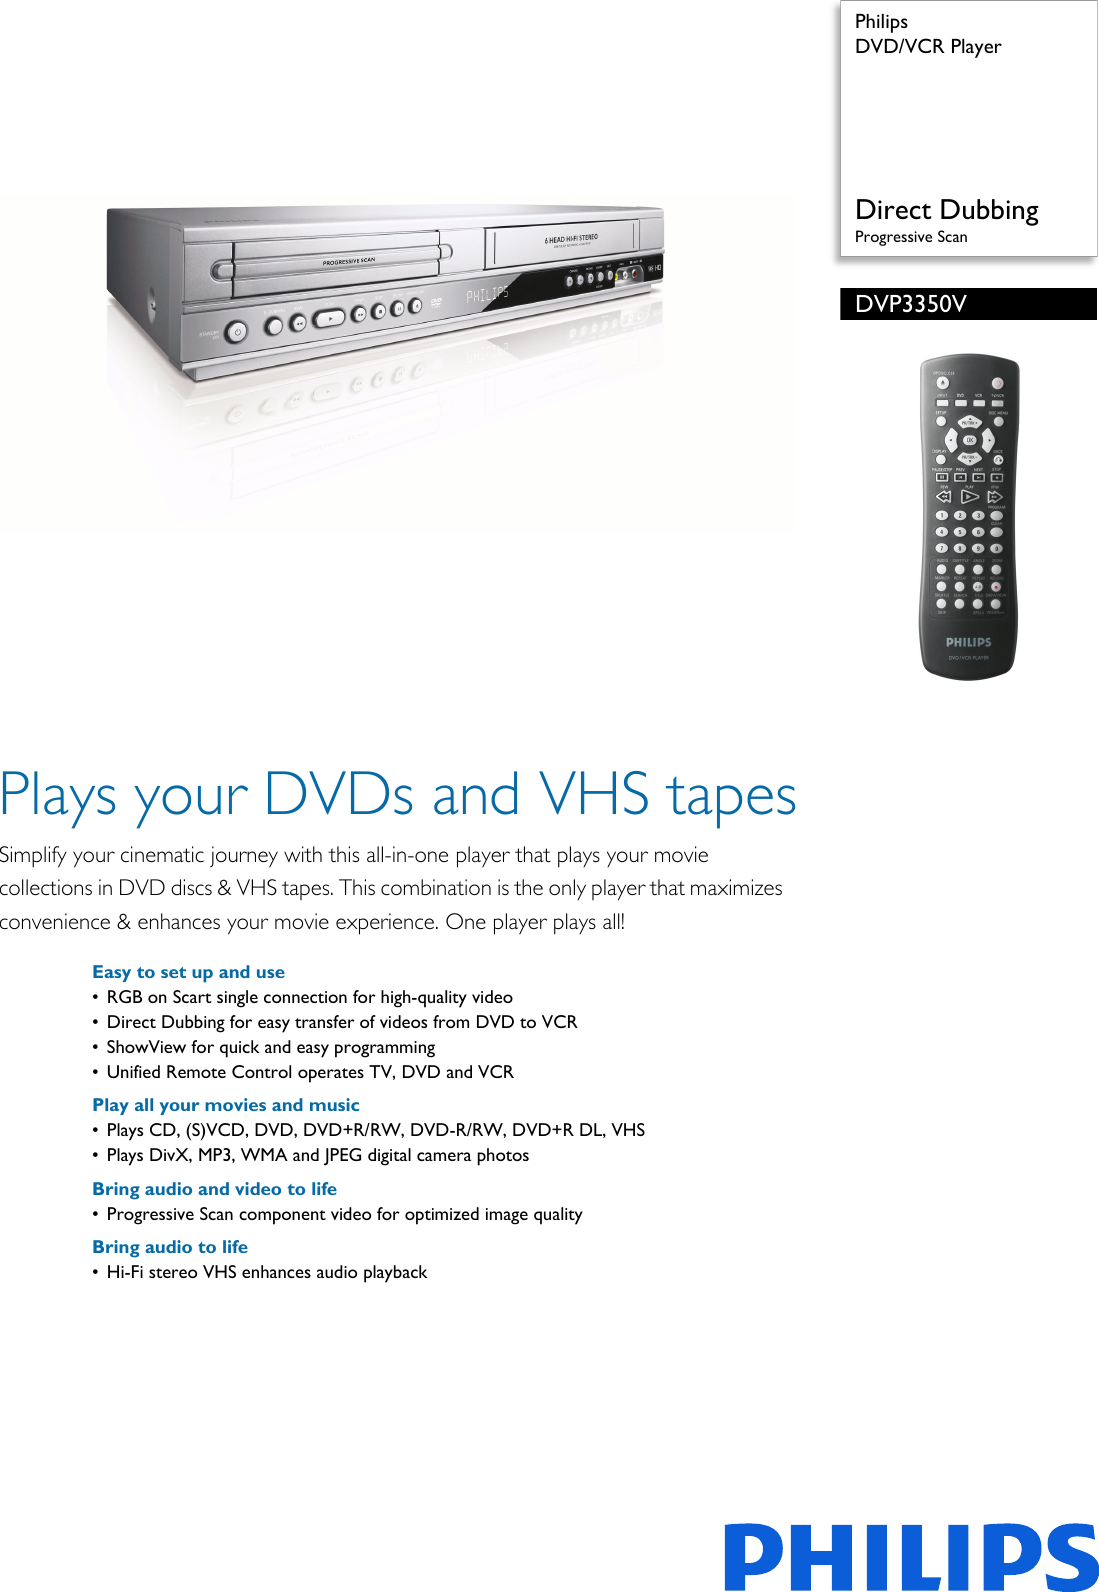 Page 1 of 3 - Philips DVP3350V/01 DVD/VCR Player User Manual Leaflet Dvp3350v 01 Pss